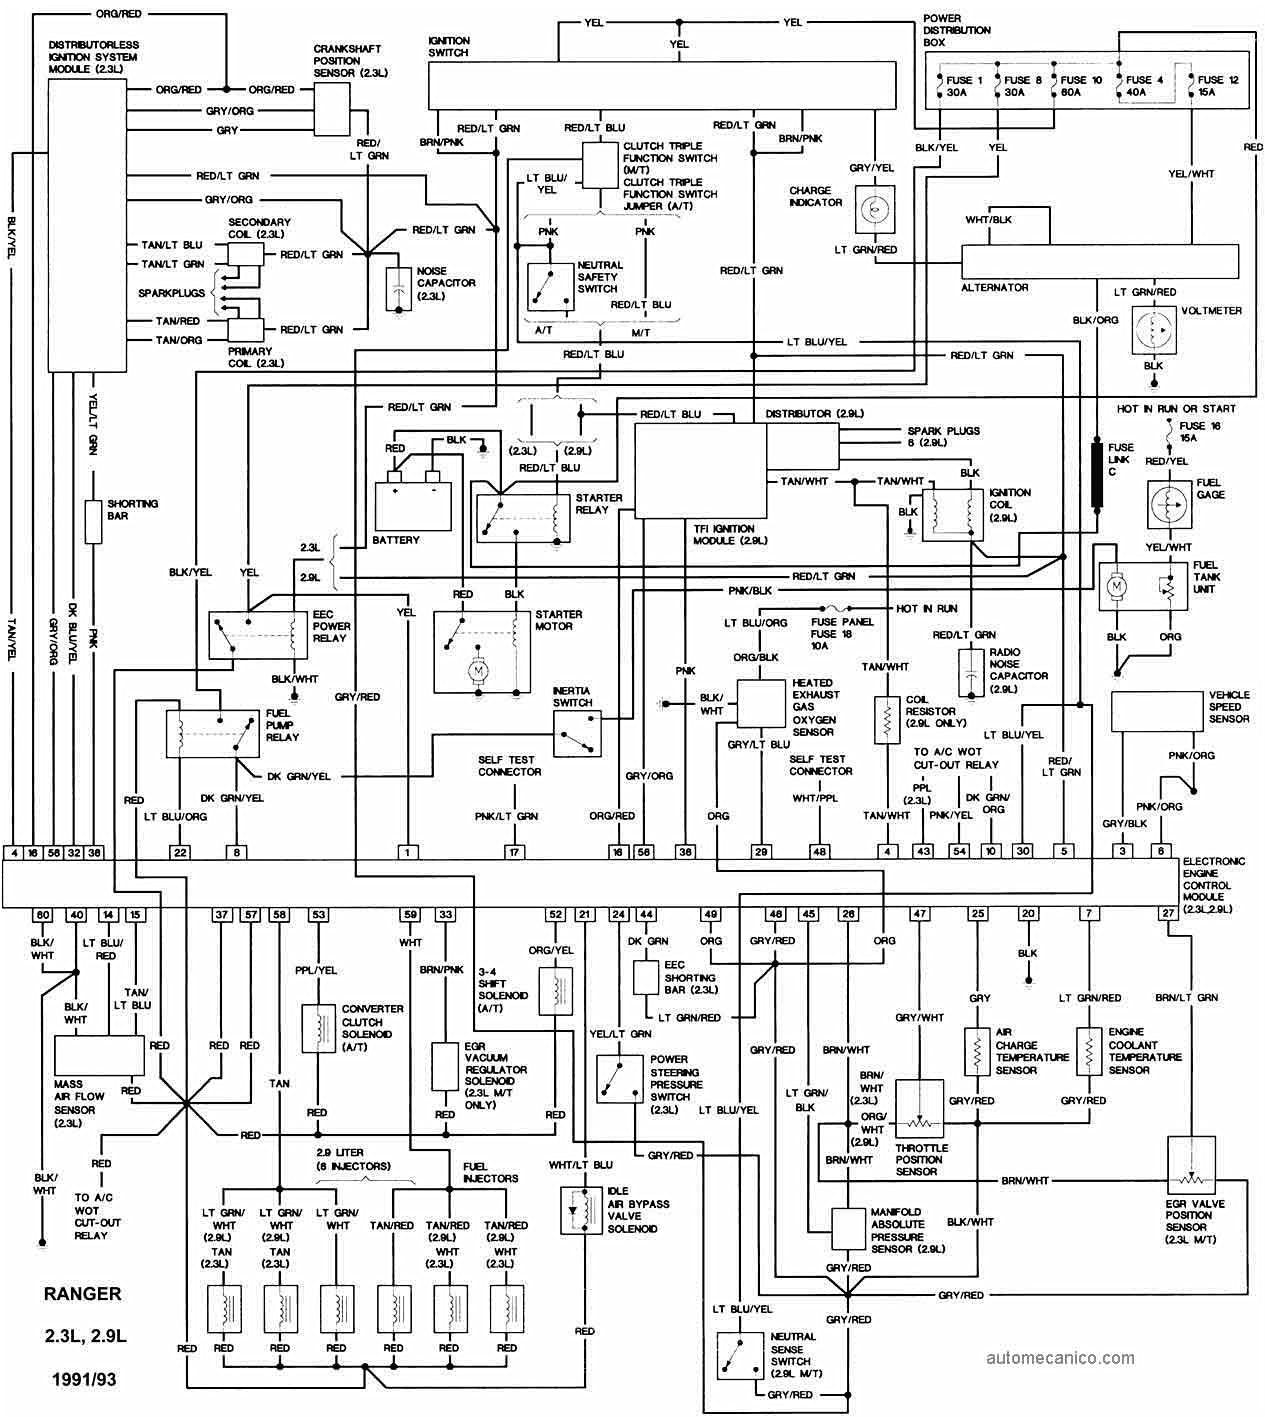 96 ford ranger 3 0 vacuum diagram wiring diagrams data 99 ford ranger engine diagram wiring